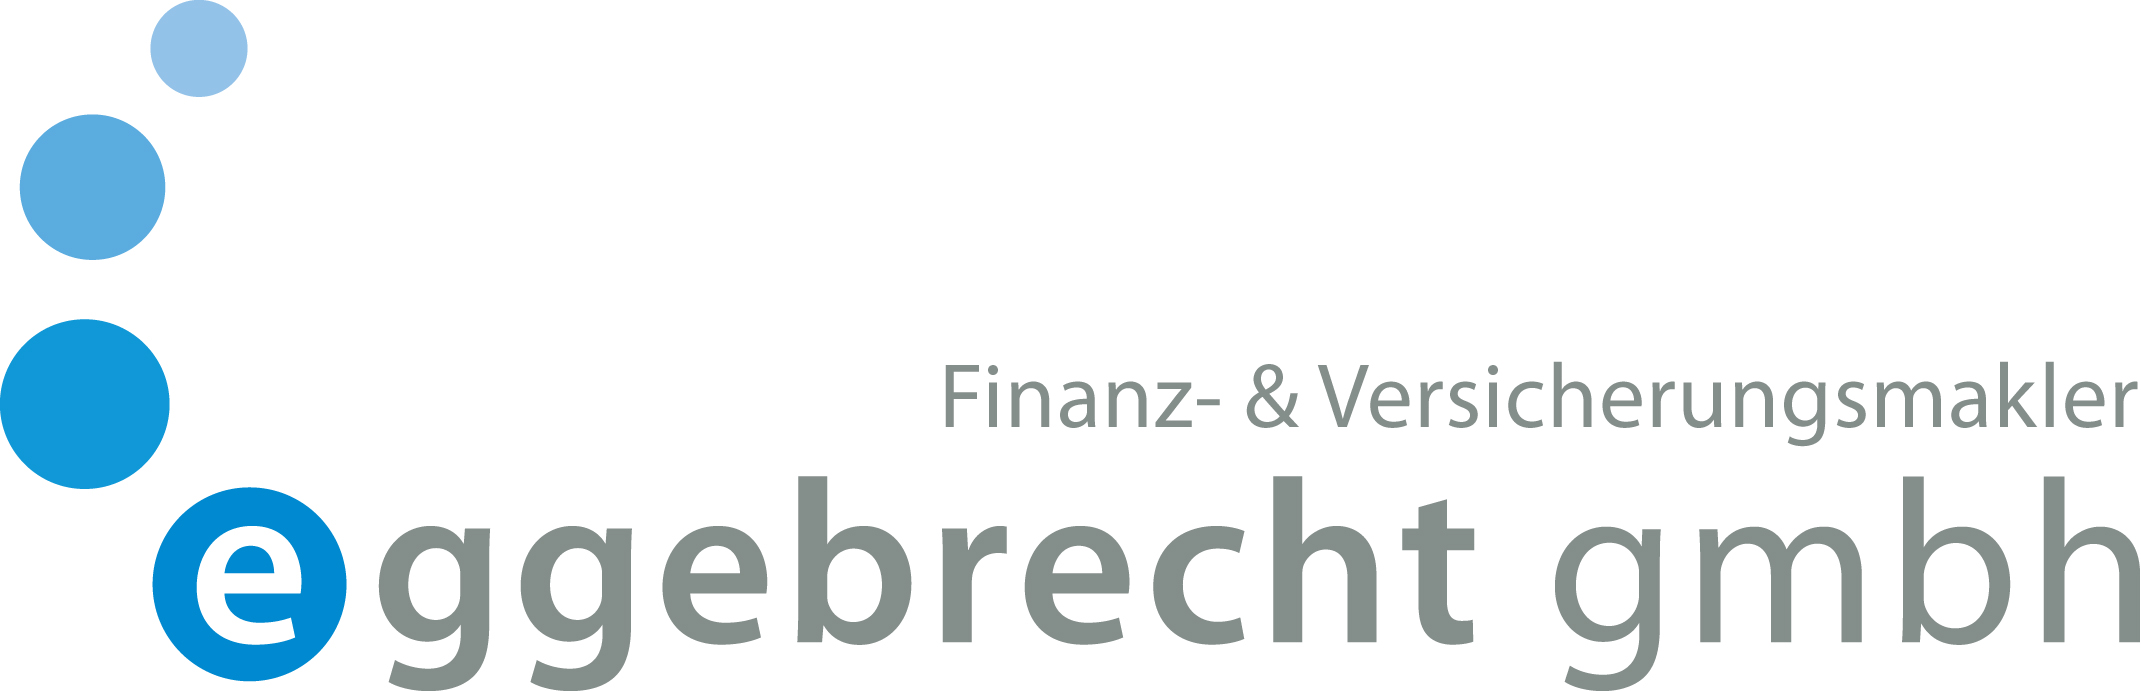 Eggebrecht GmbH